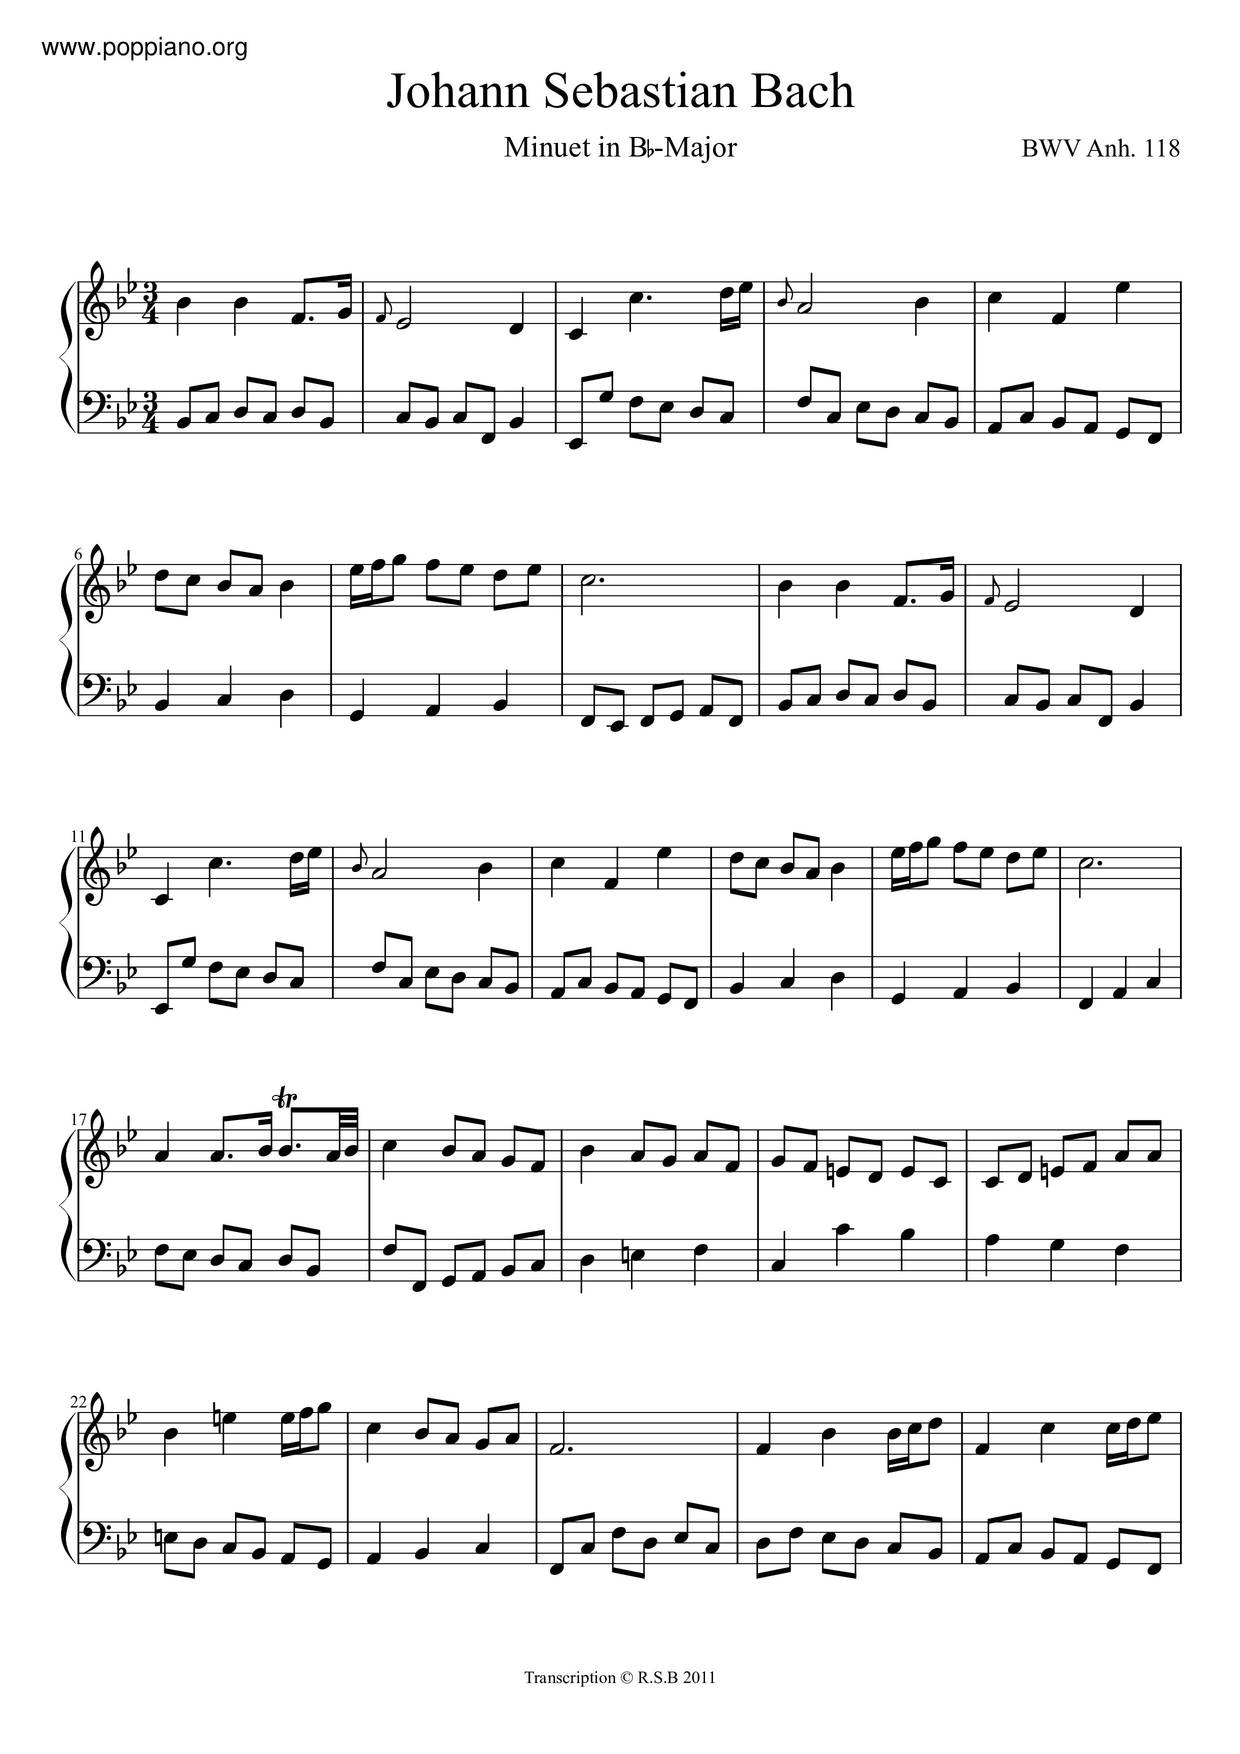 Minuet In B-Flat Major, BWV Anh. 118ピアノ譜